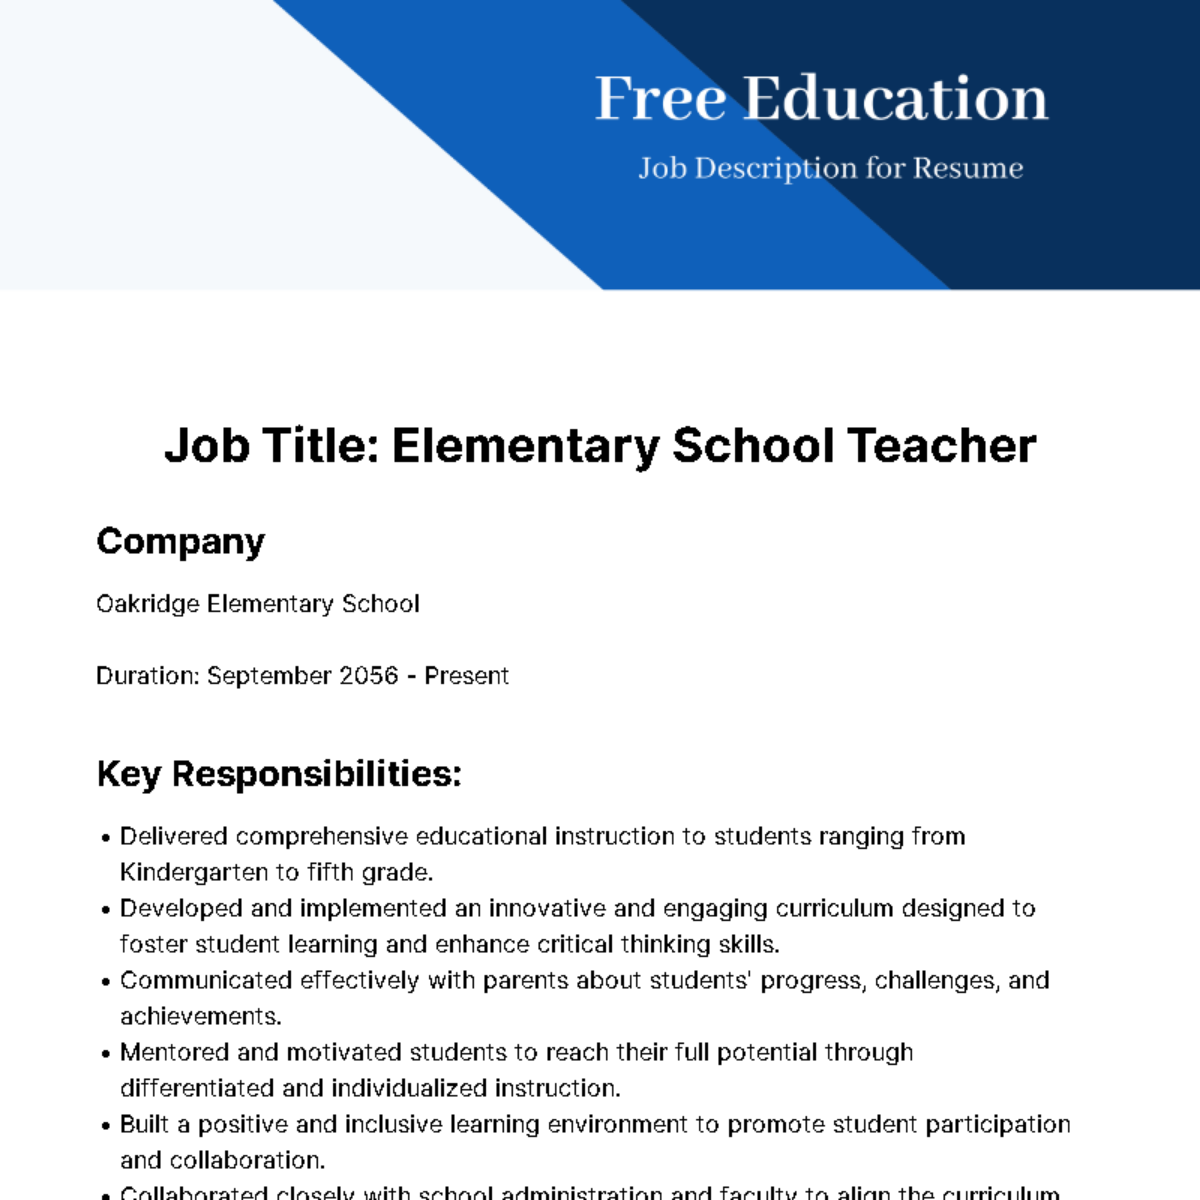 Free Education Job Description for Resume Template